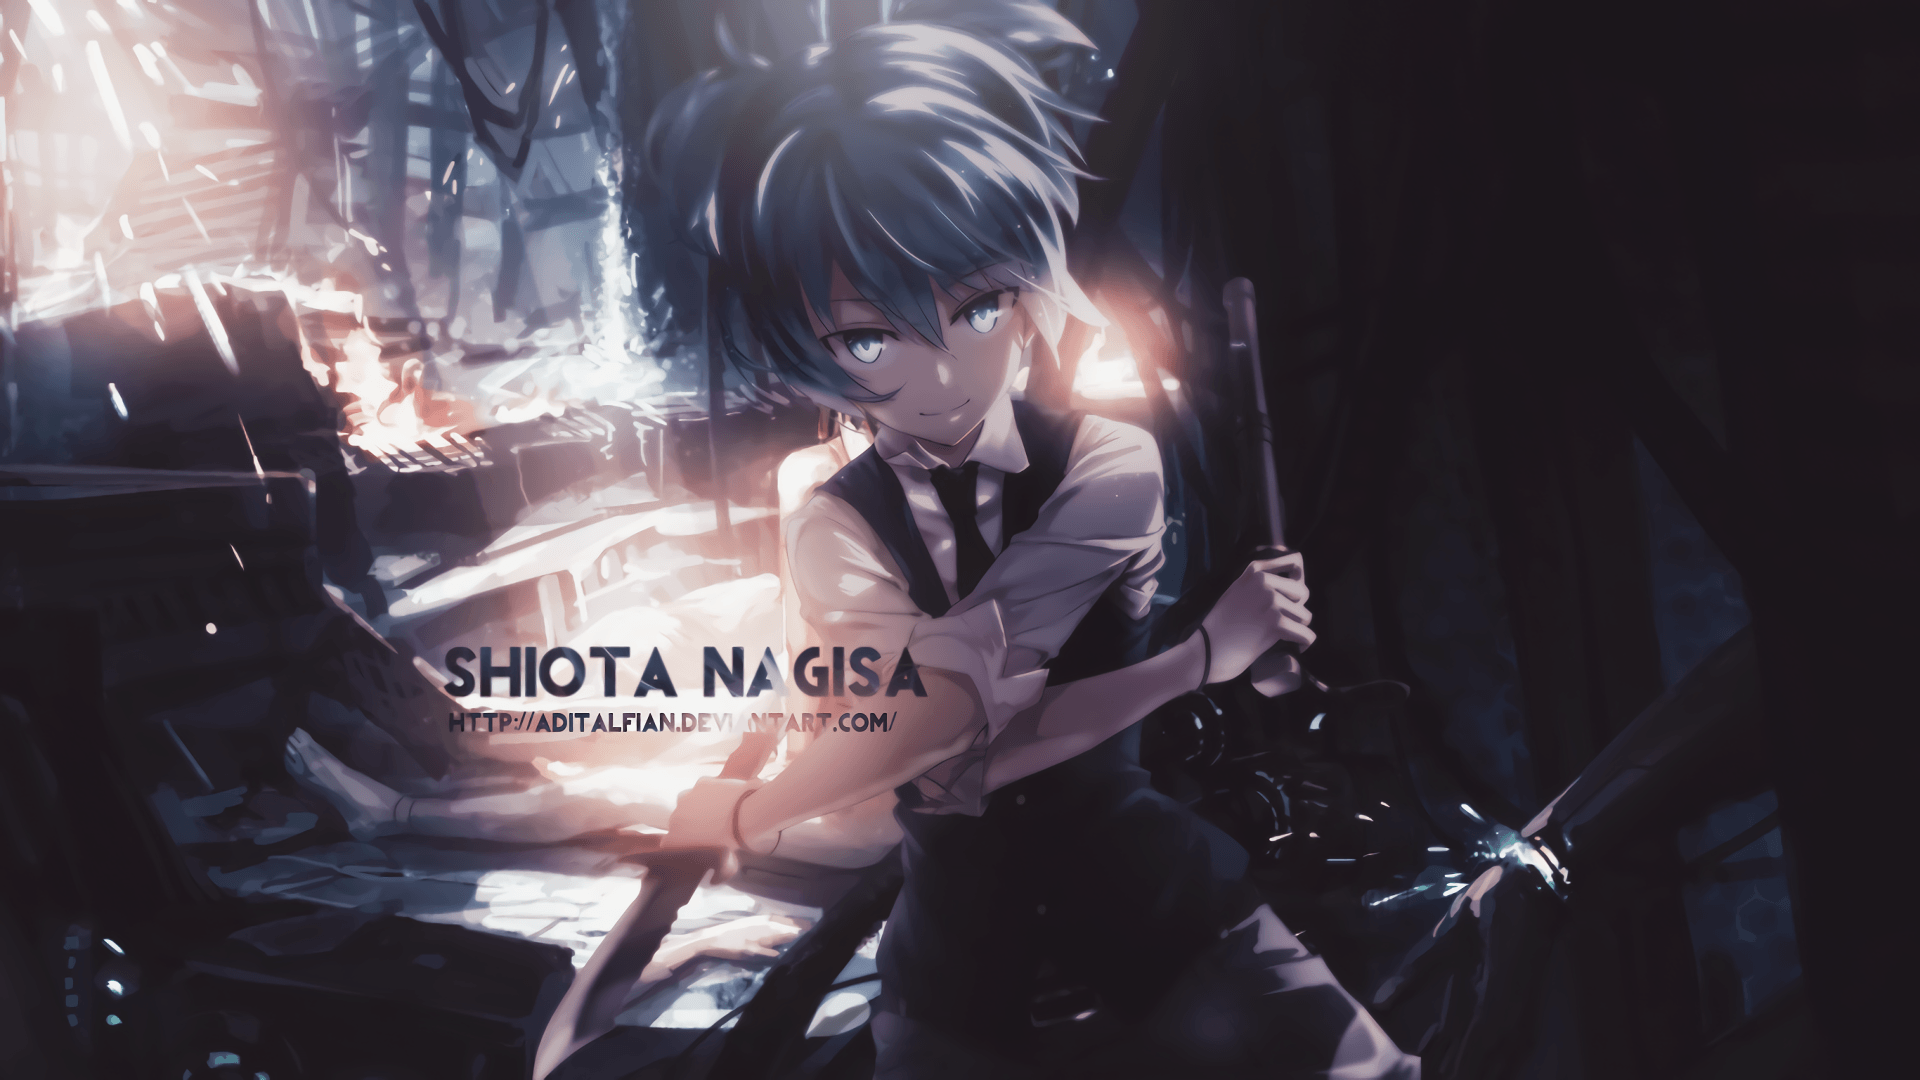 Nagisa Shiota HD Wallpaper and Background Image